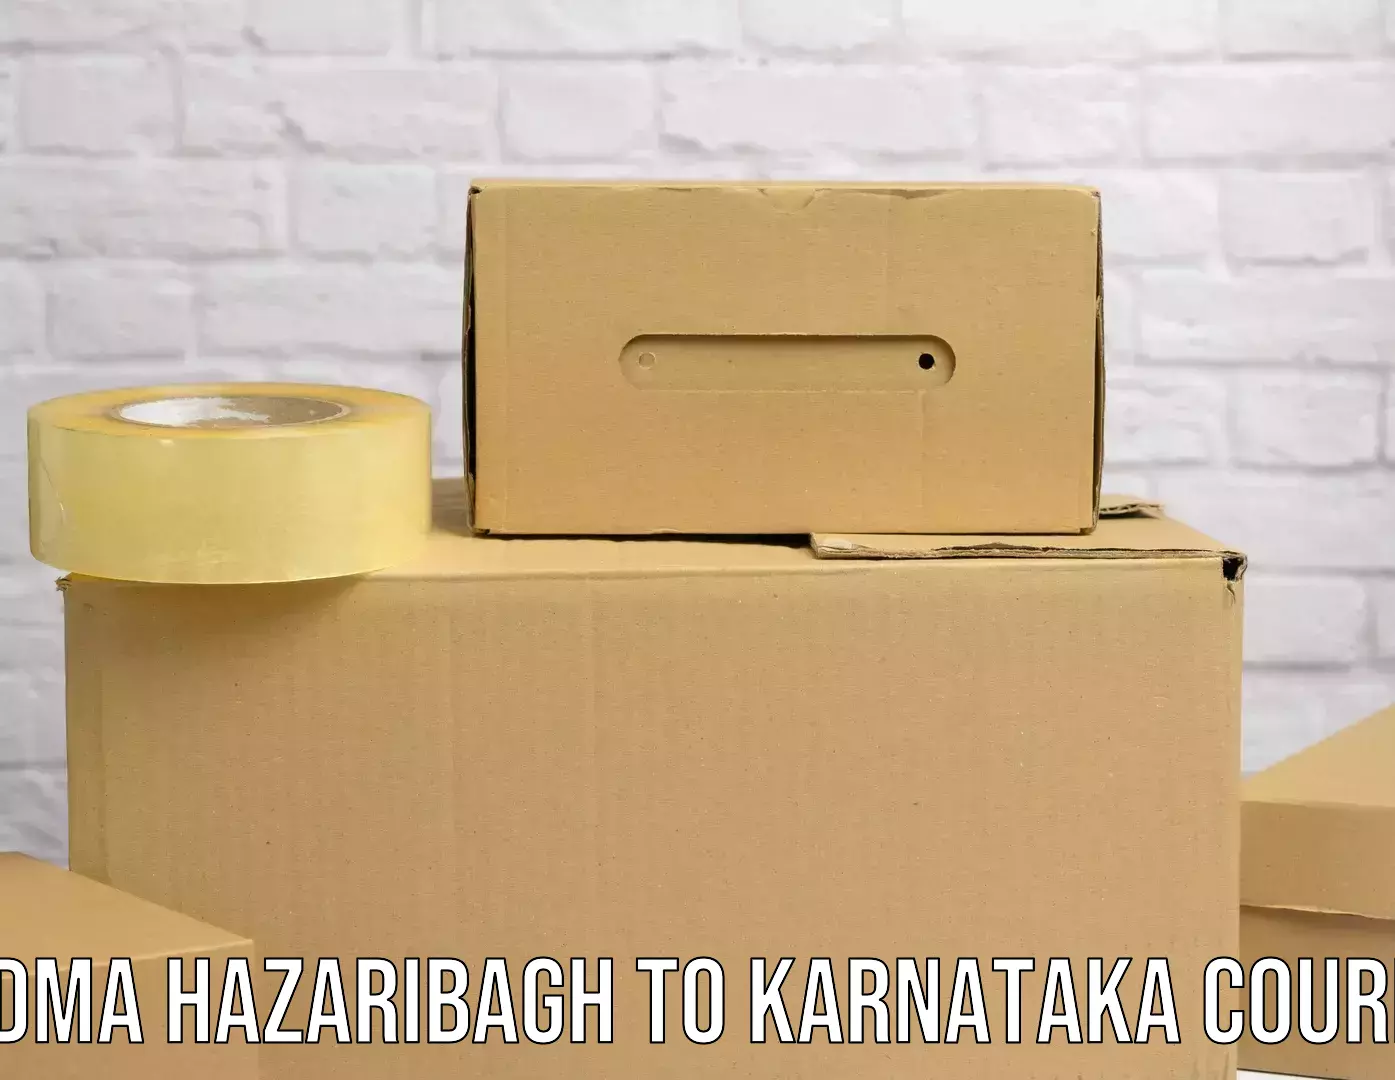 Sustainable shipping practices Padma Hazaribagh to Ankola